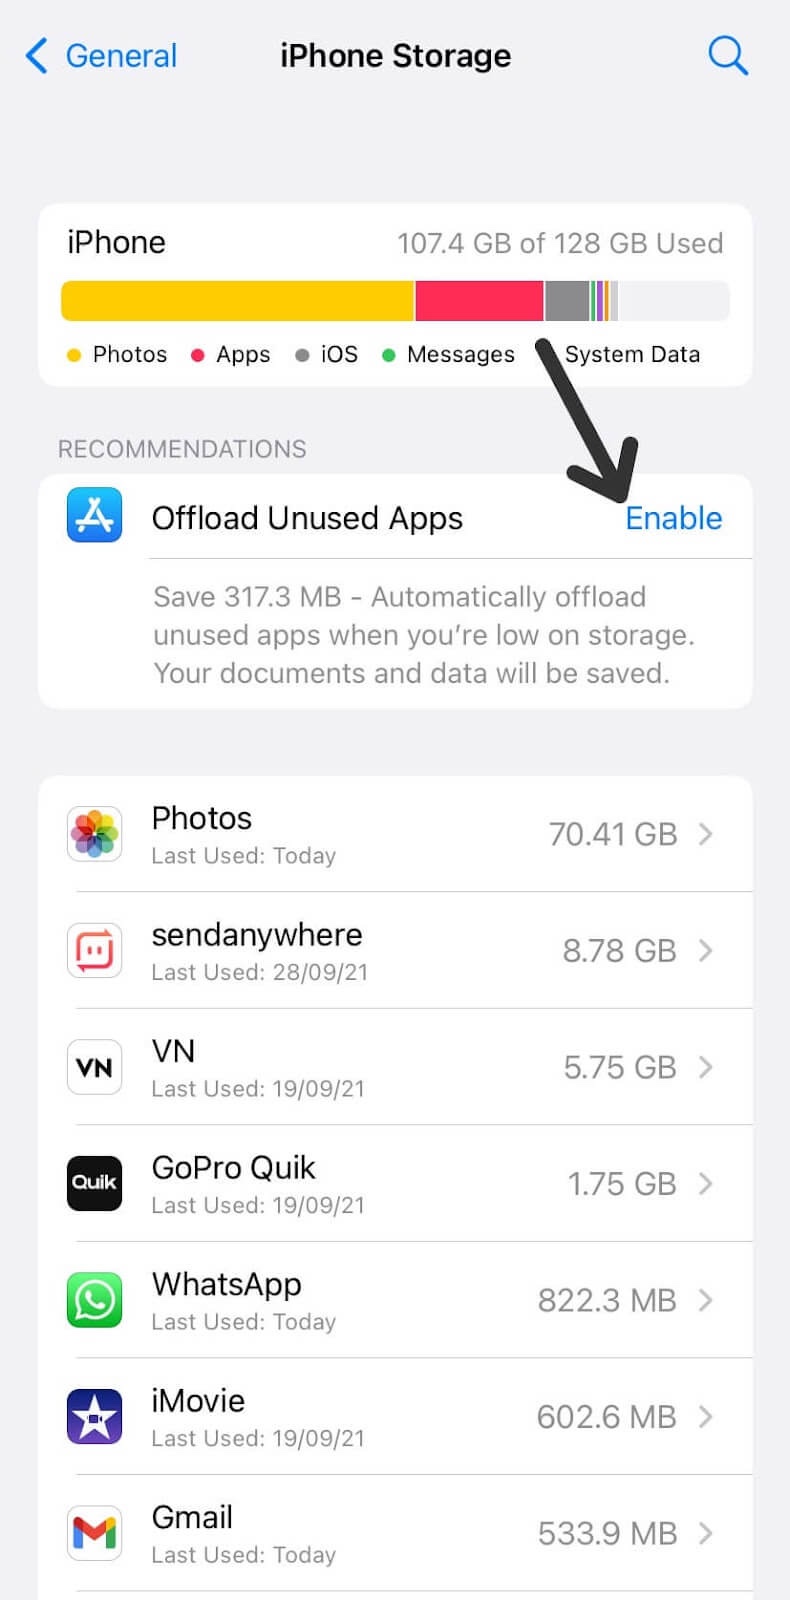 Offload unused apps